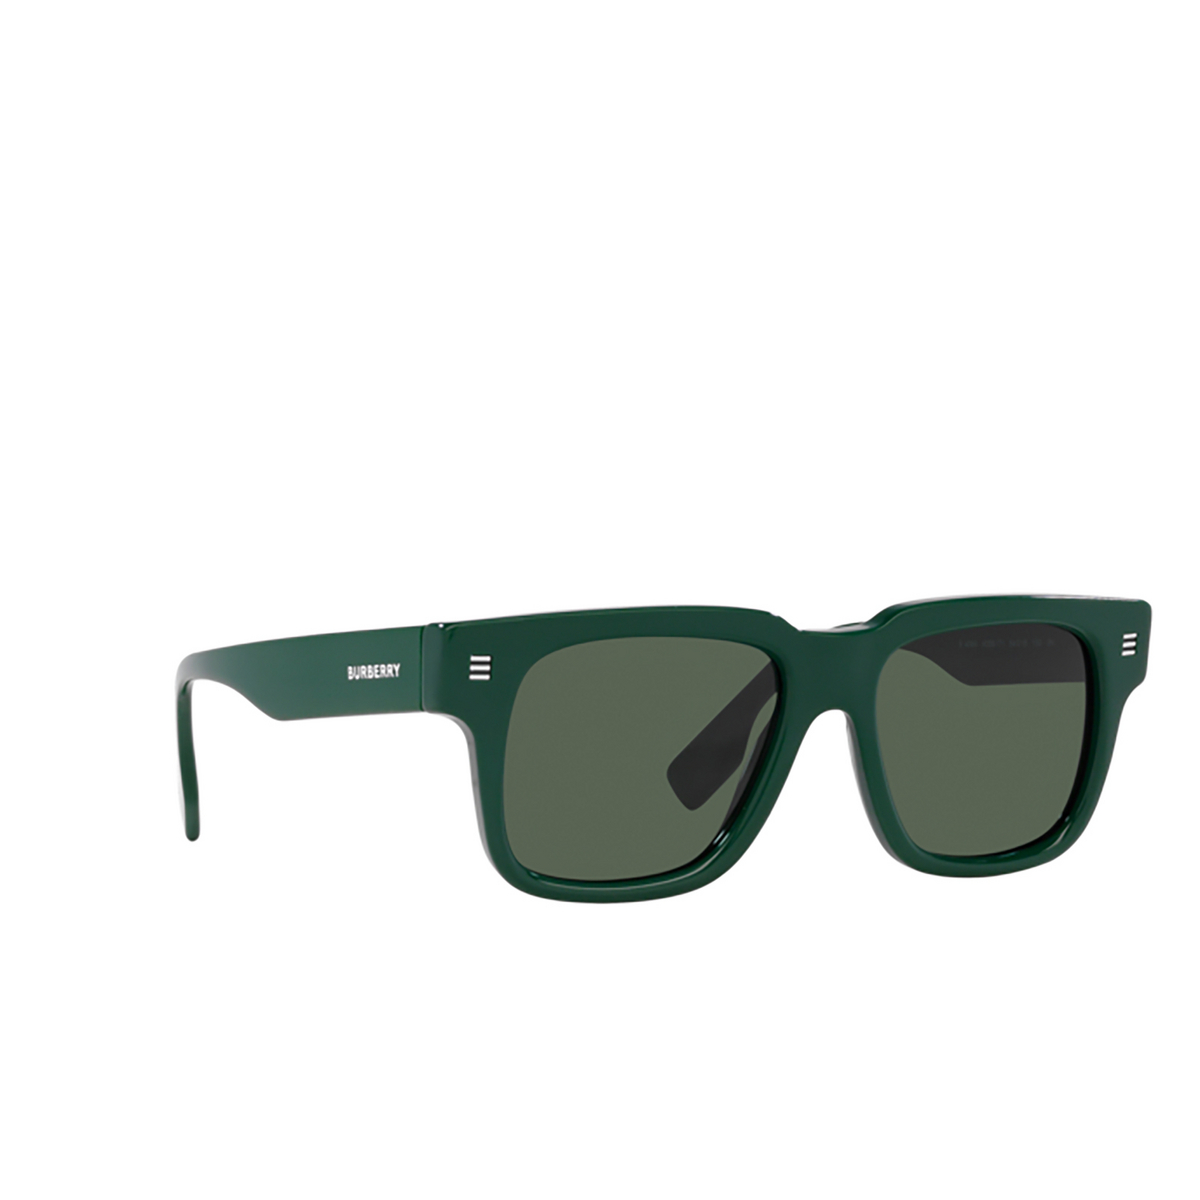 Burberry HAYDEN Sunglasses 405971 Green - three-quarters view